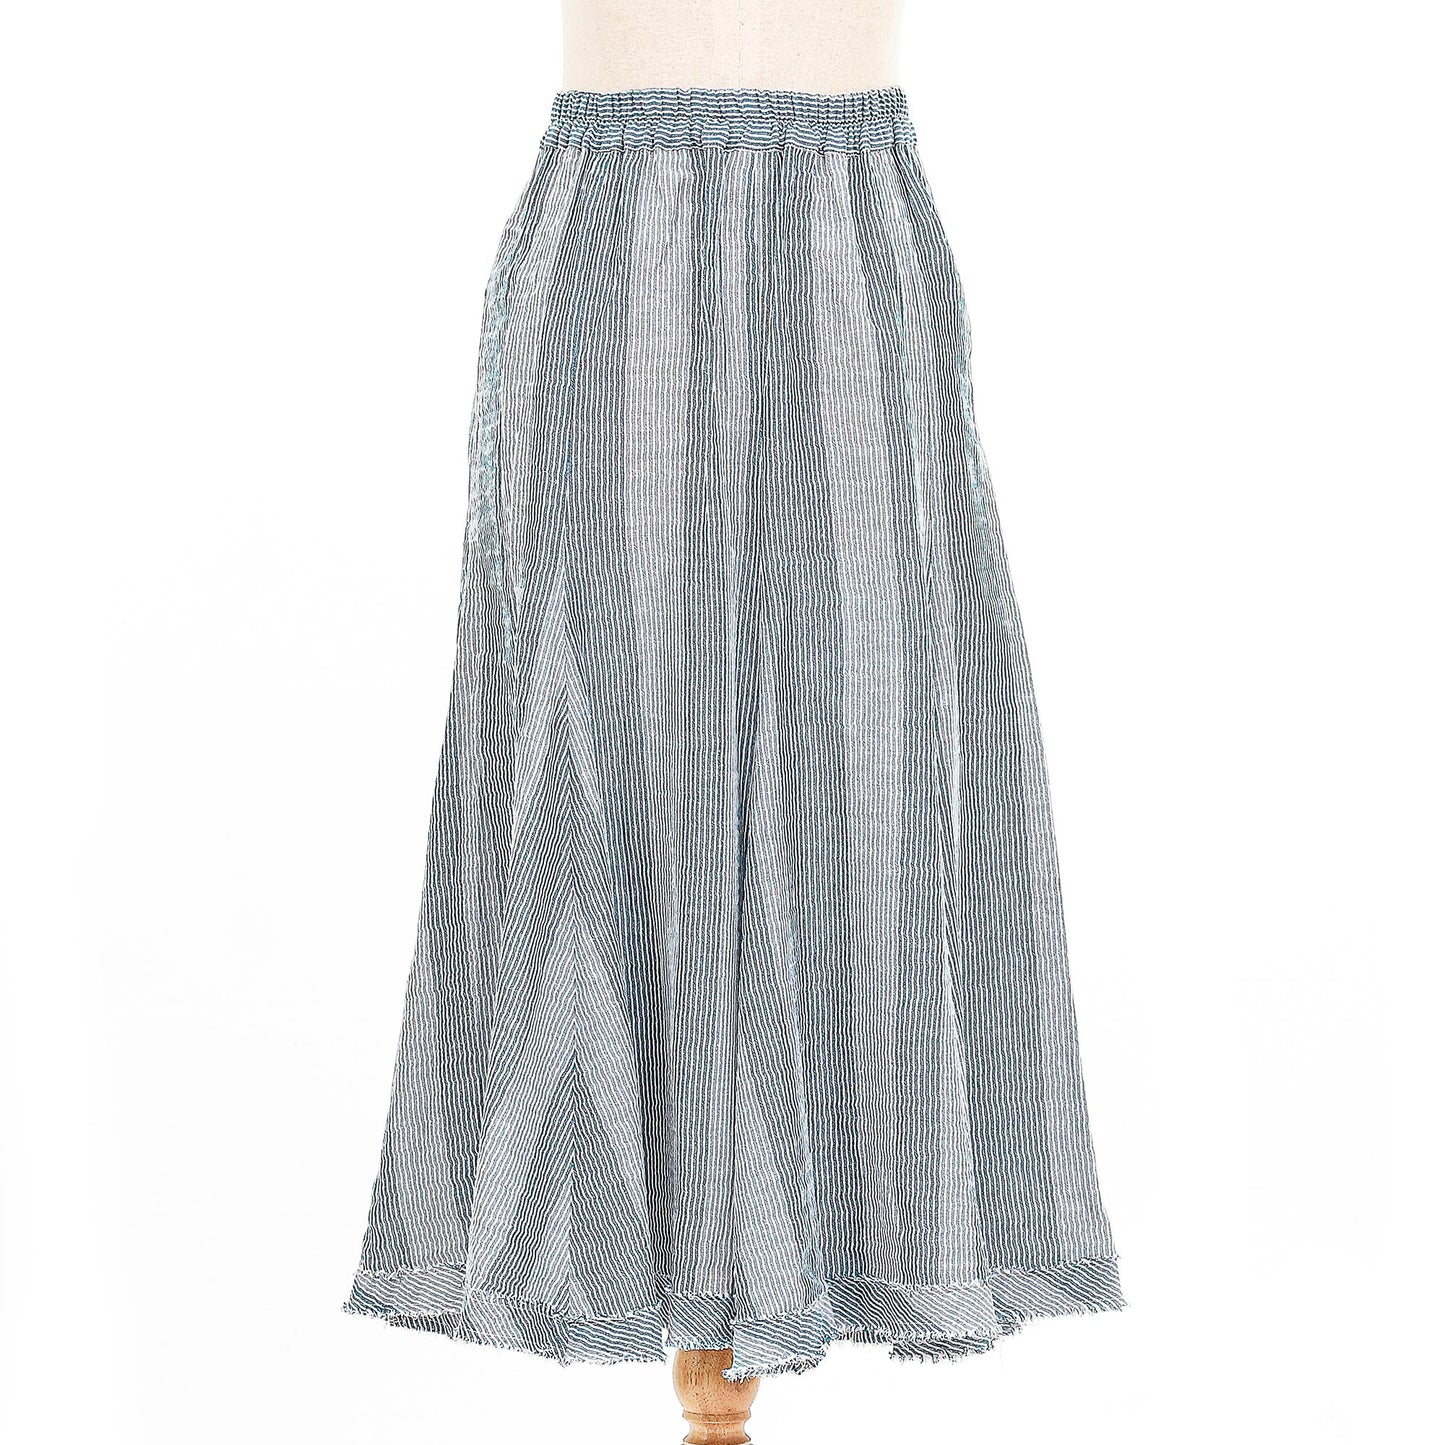 Blue Rain Striped Cotton Skirt from Thailand